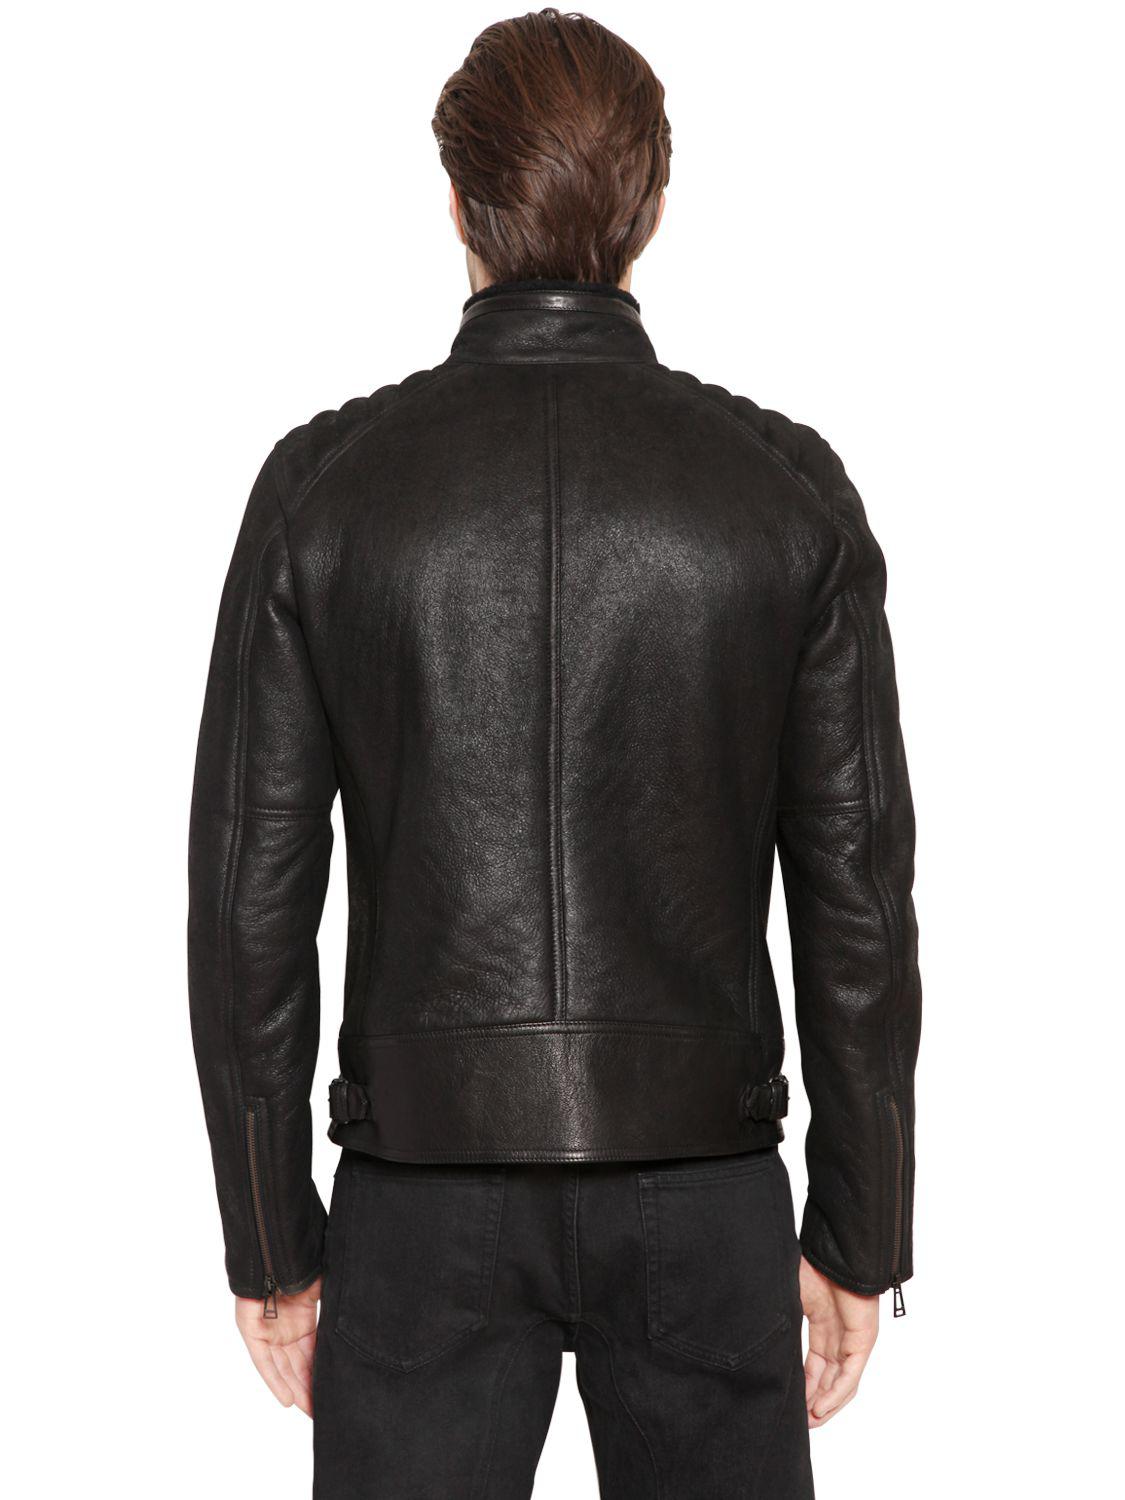 Belstaff Westlake Shearling Leather Jacket in Black for Men - Lyst